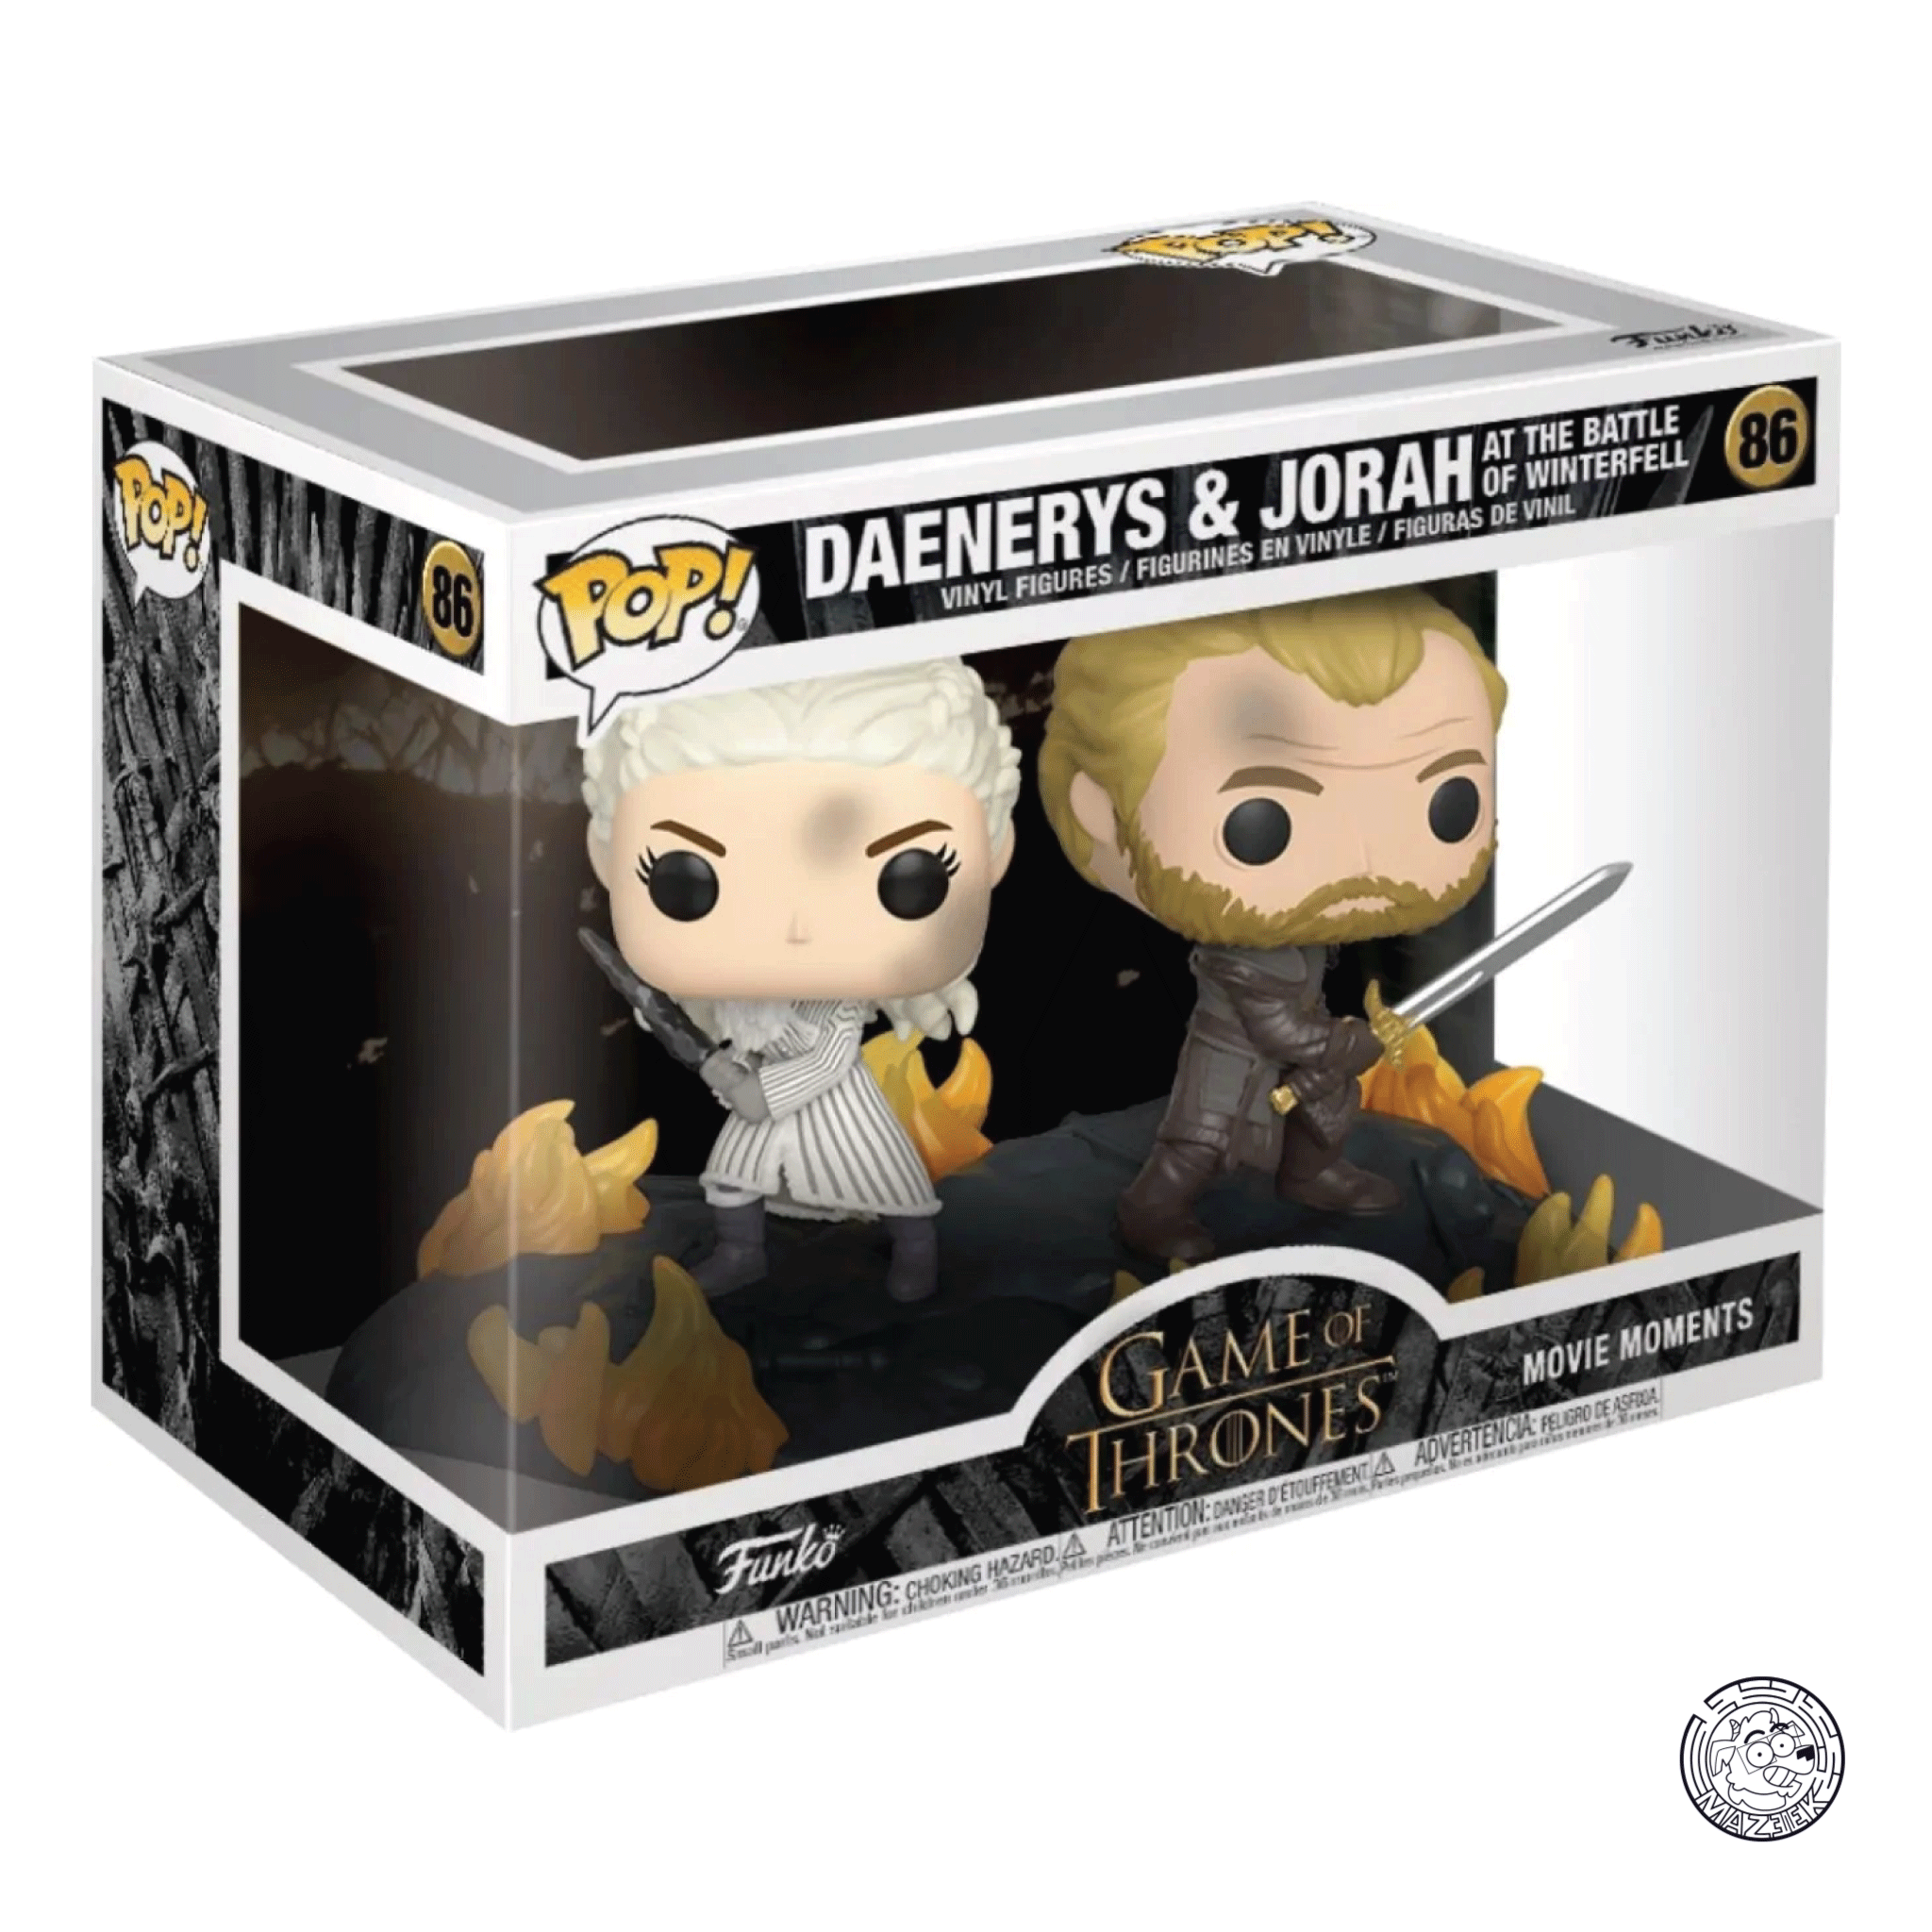 Funko POP! Game of Thrones: Daenerys & Jorah at the Battle of Winterfell 86